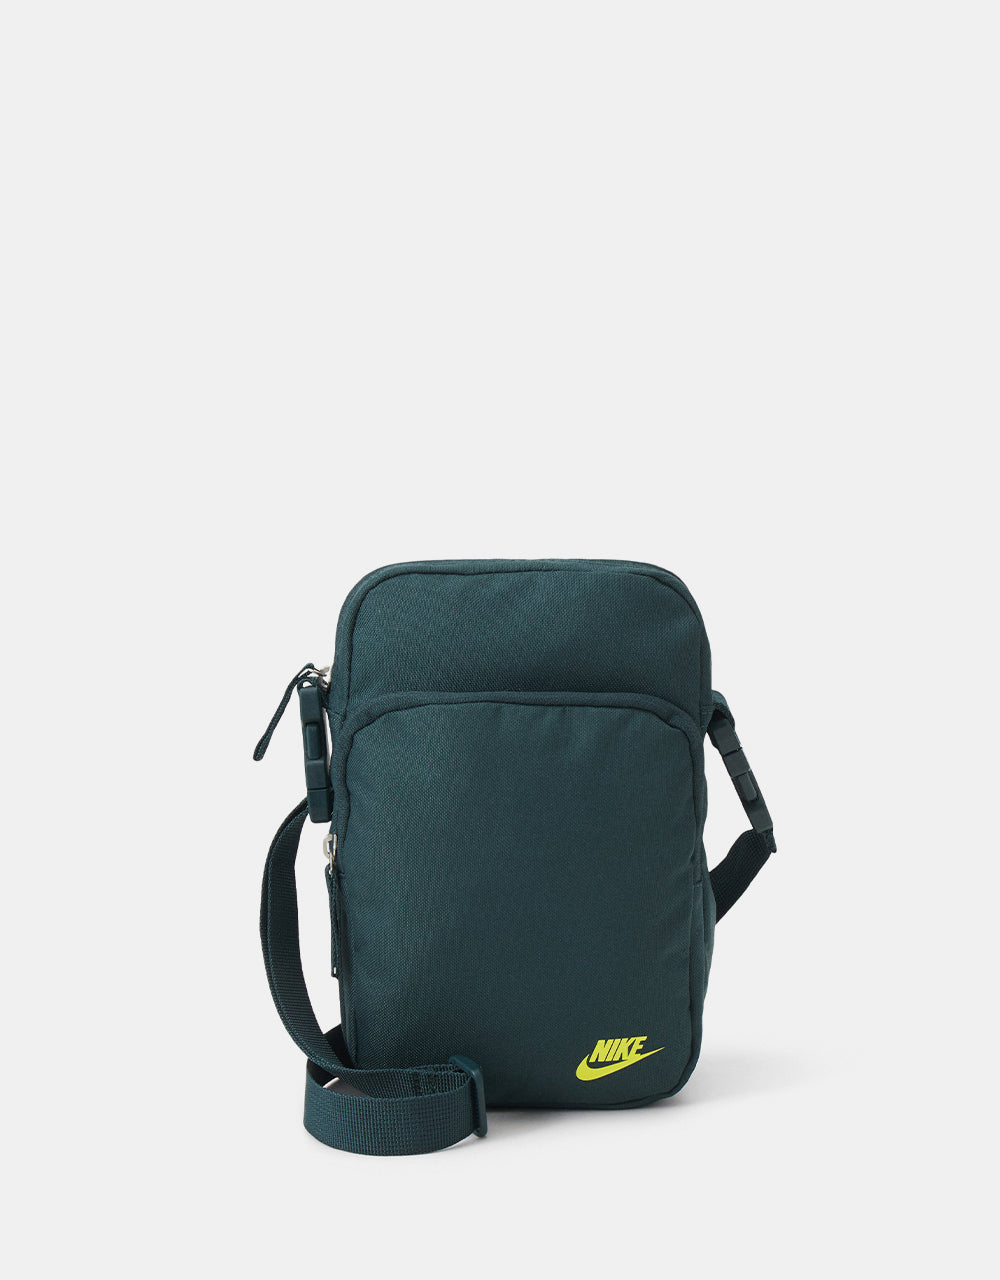 Nike SB Heritage Cross Body Bag - Deep Jungle/High Voltage